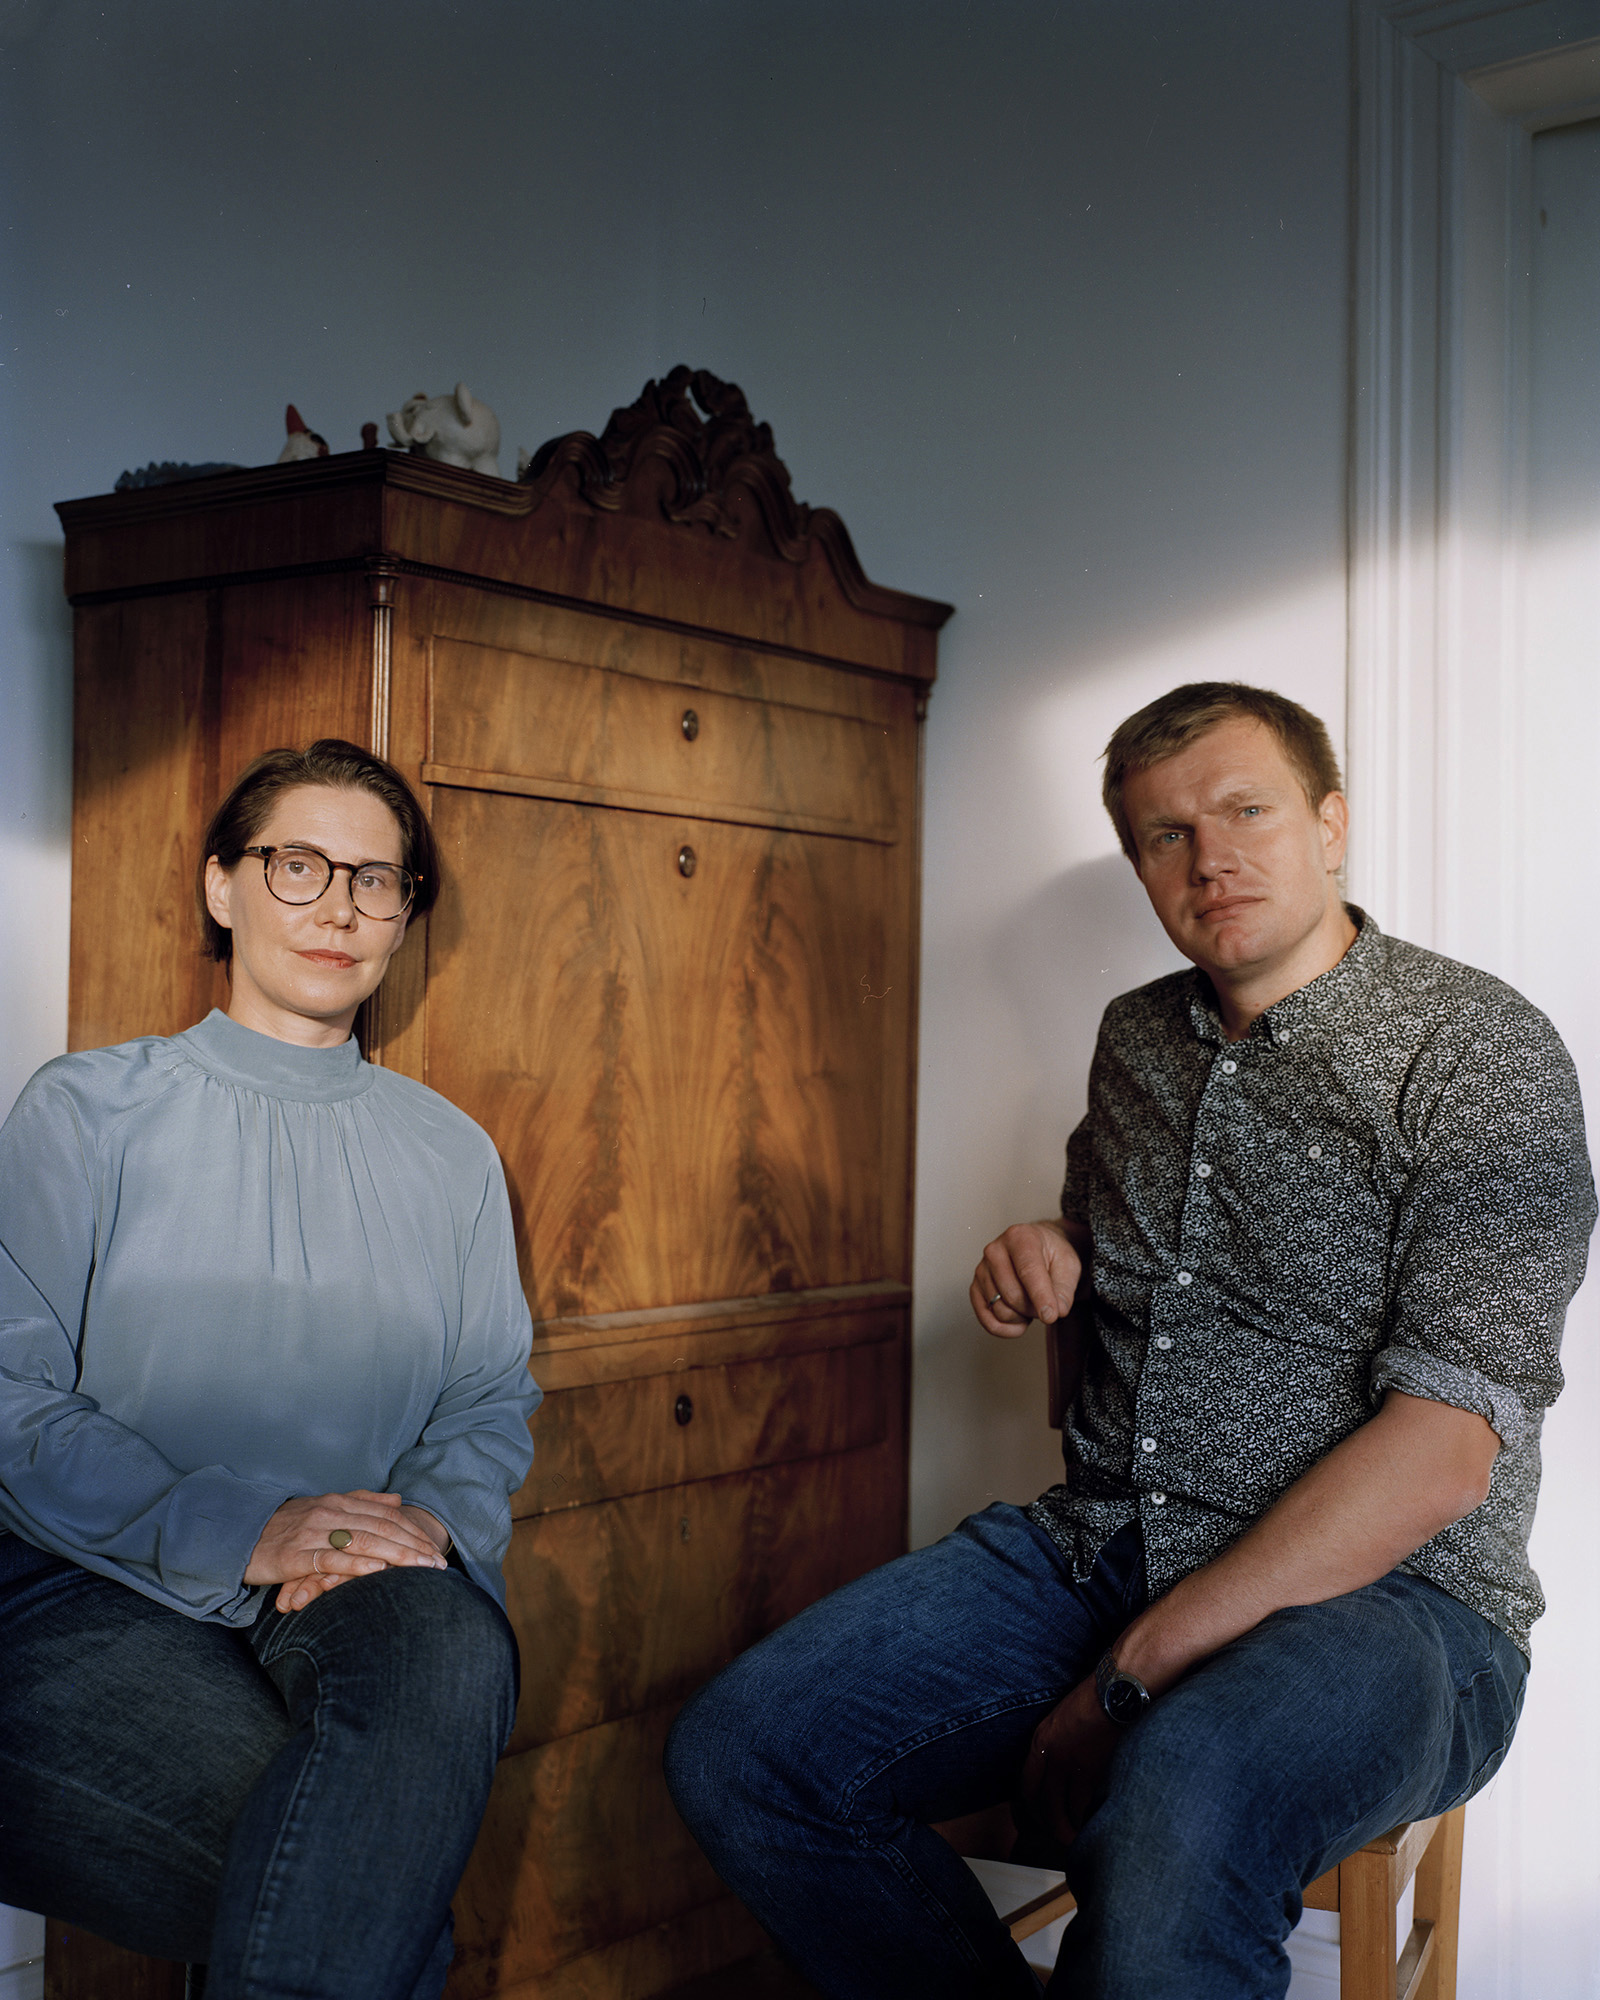 KAJA SMITH Julia Wöllenstein and Marcel Helbig, CHRISMON